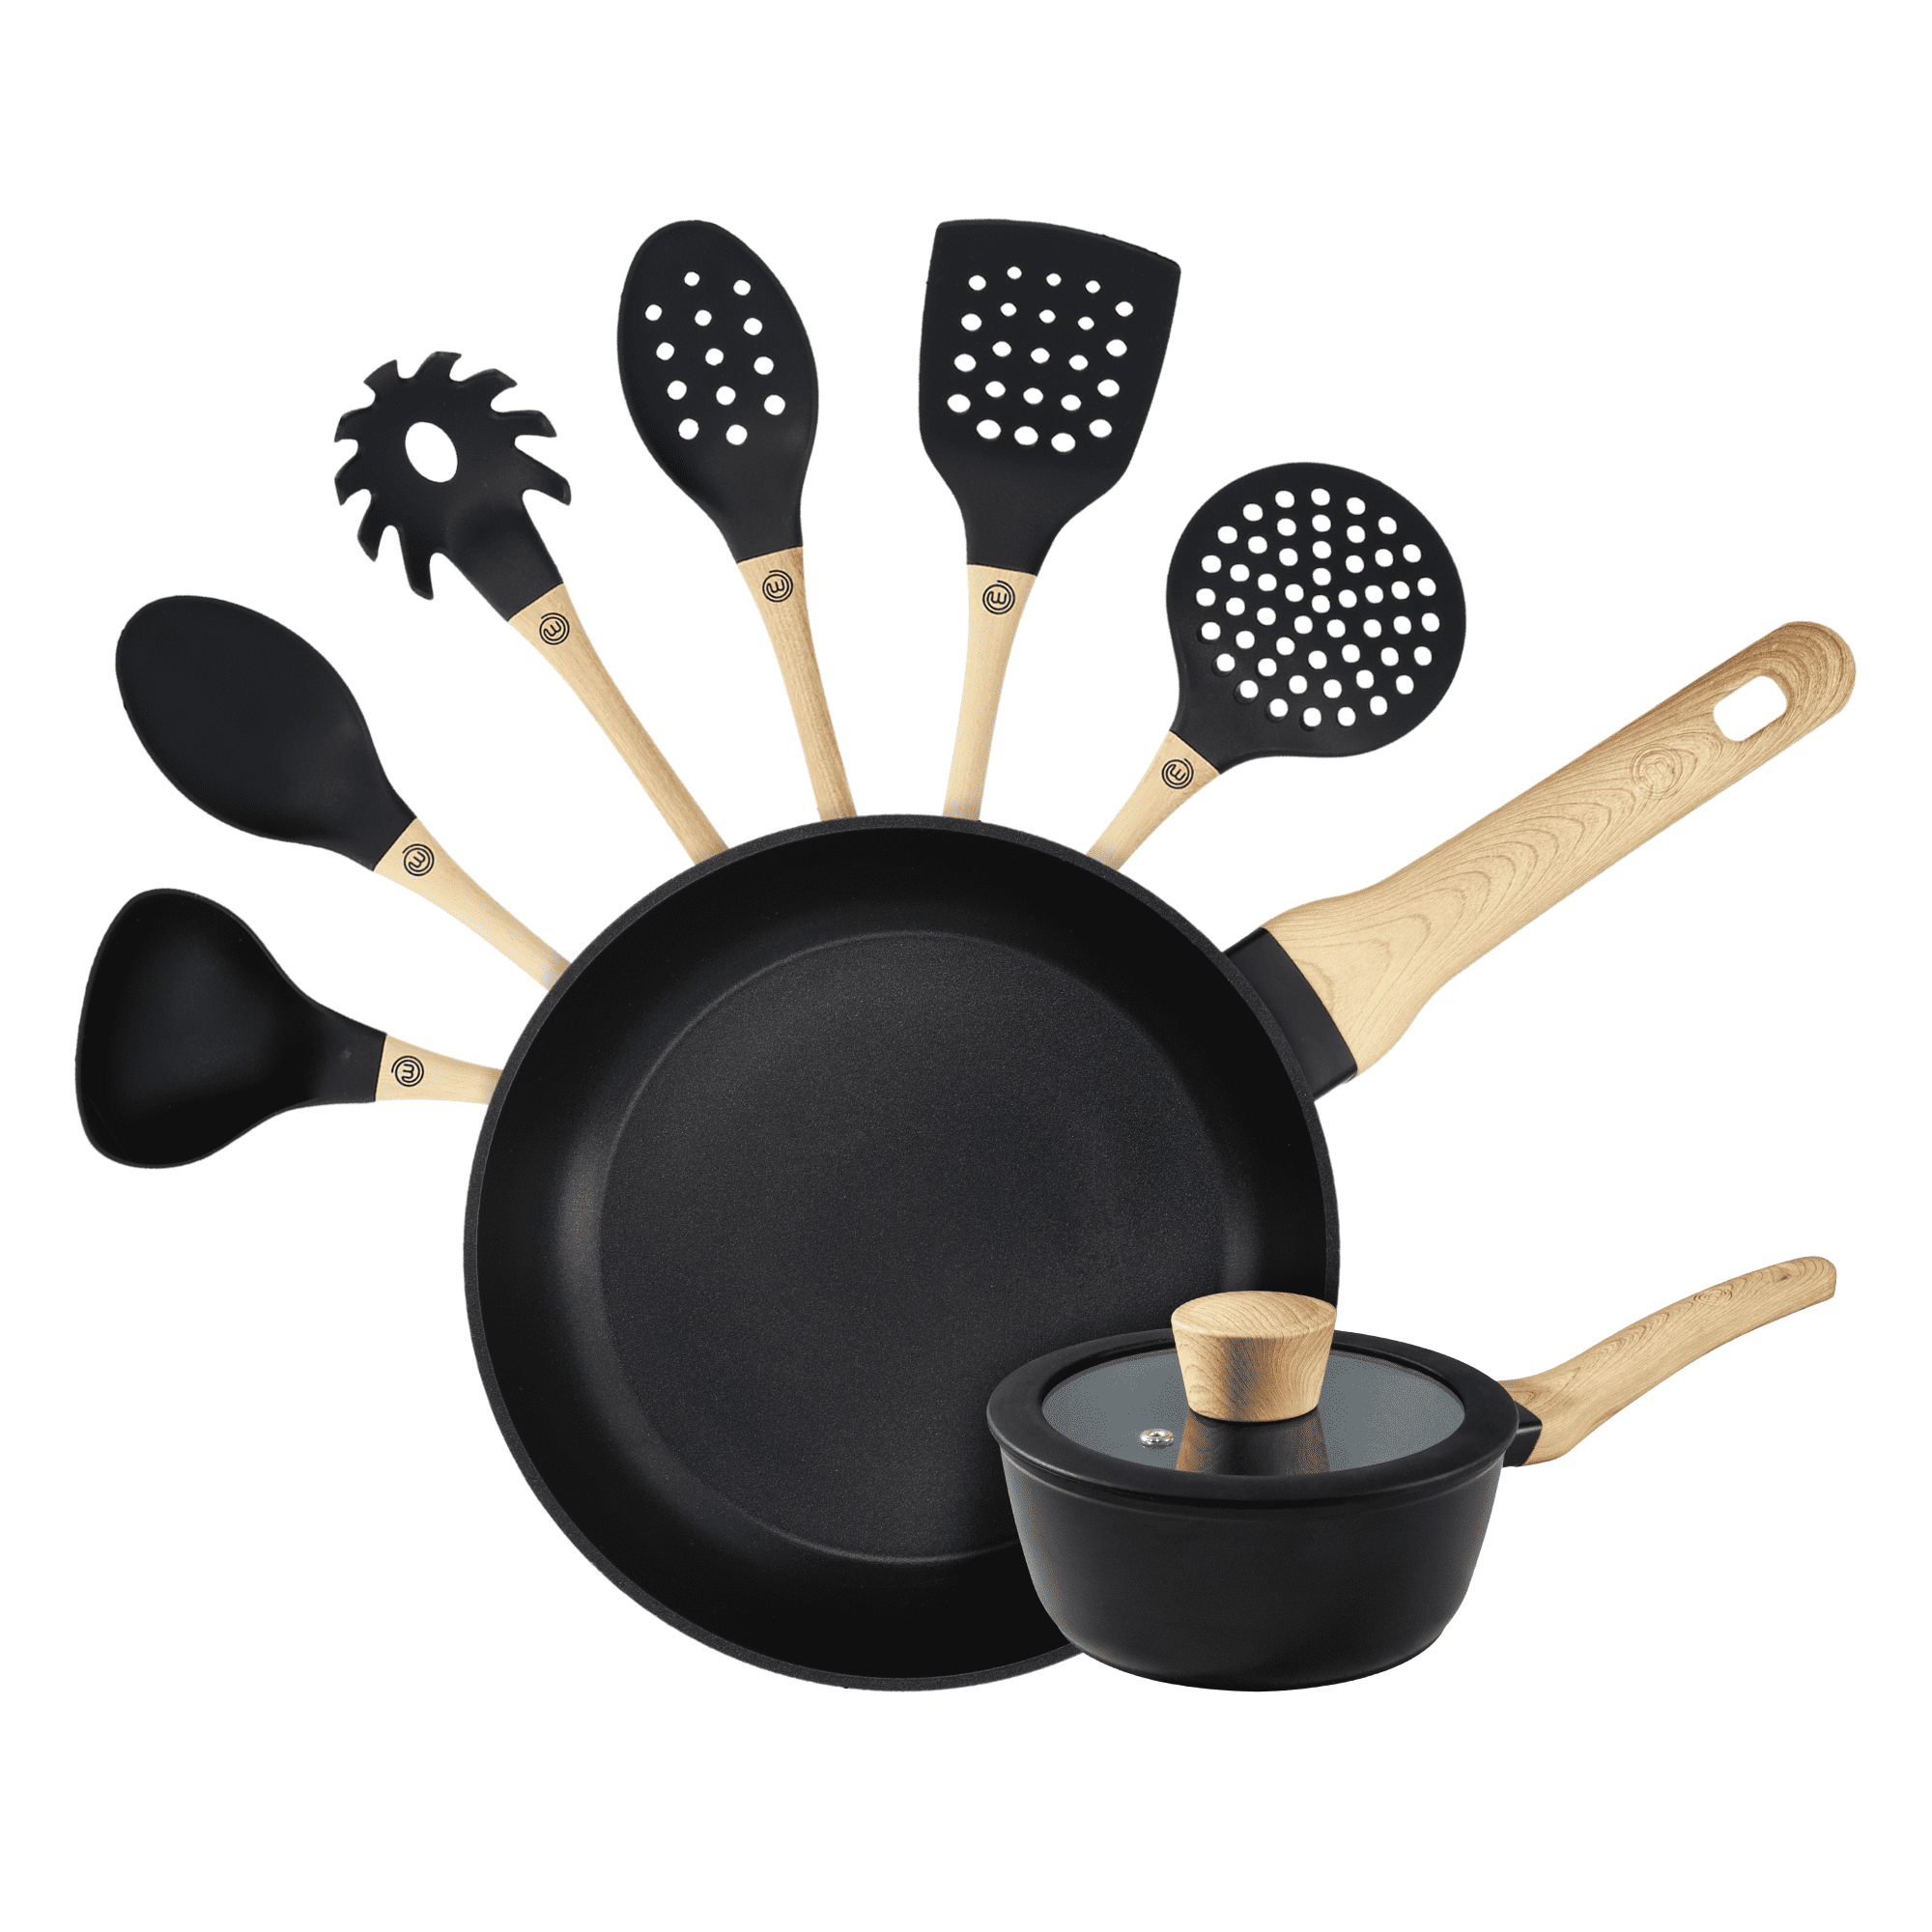 MasterChef Pots and Pans Set, 4 piece Induction Hob Pan Set of Non Stick  Cookware including 2 x Frying Pans (20cm & 24cm) and 2 x Saucepans with  Lids